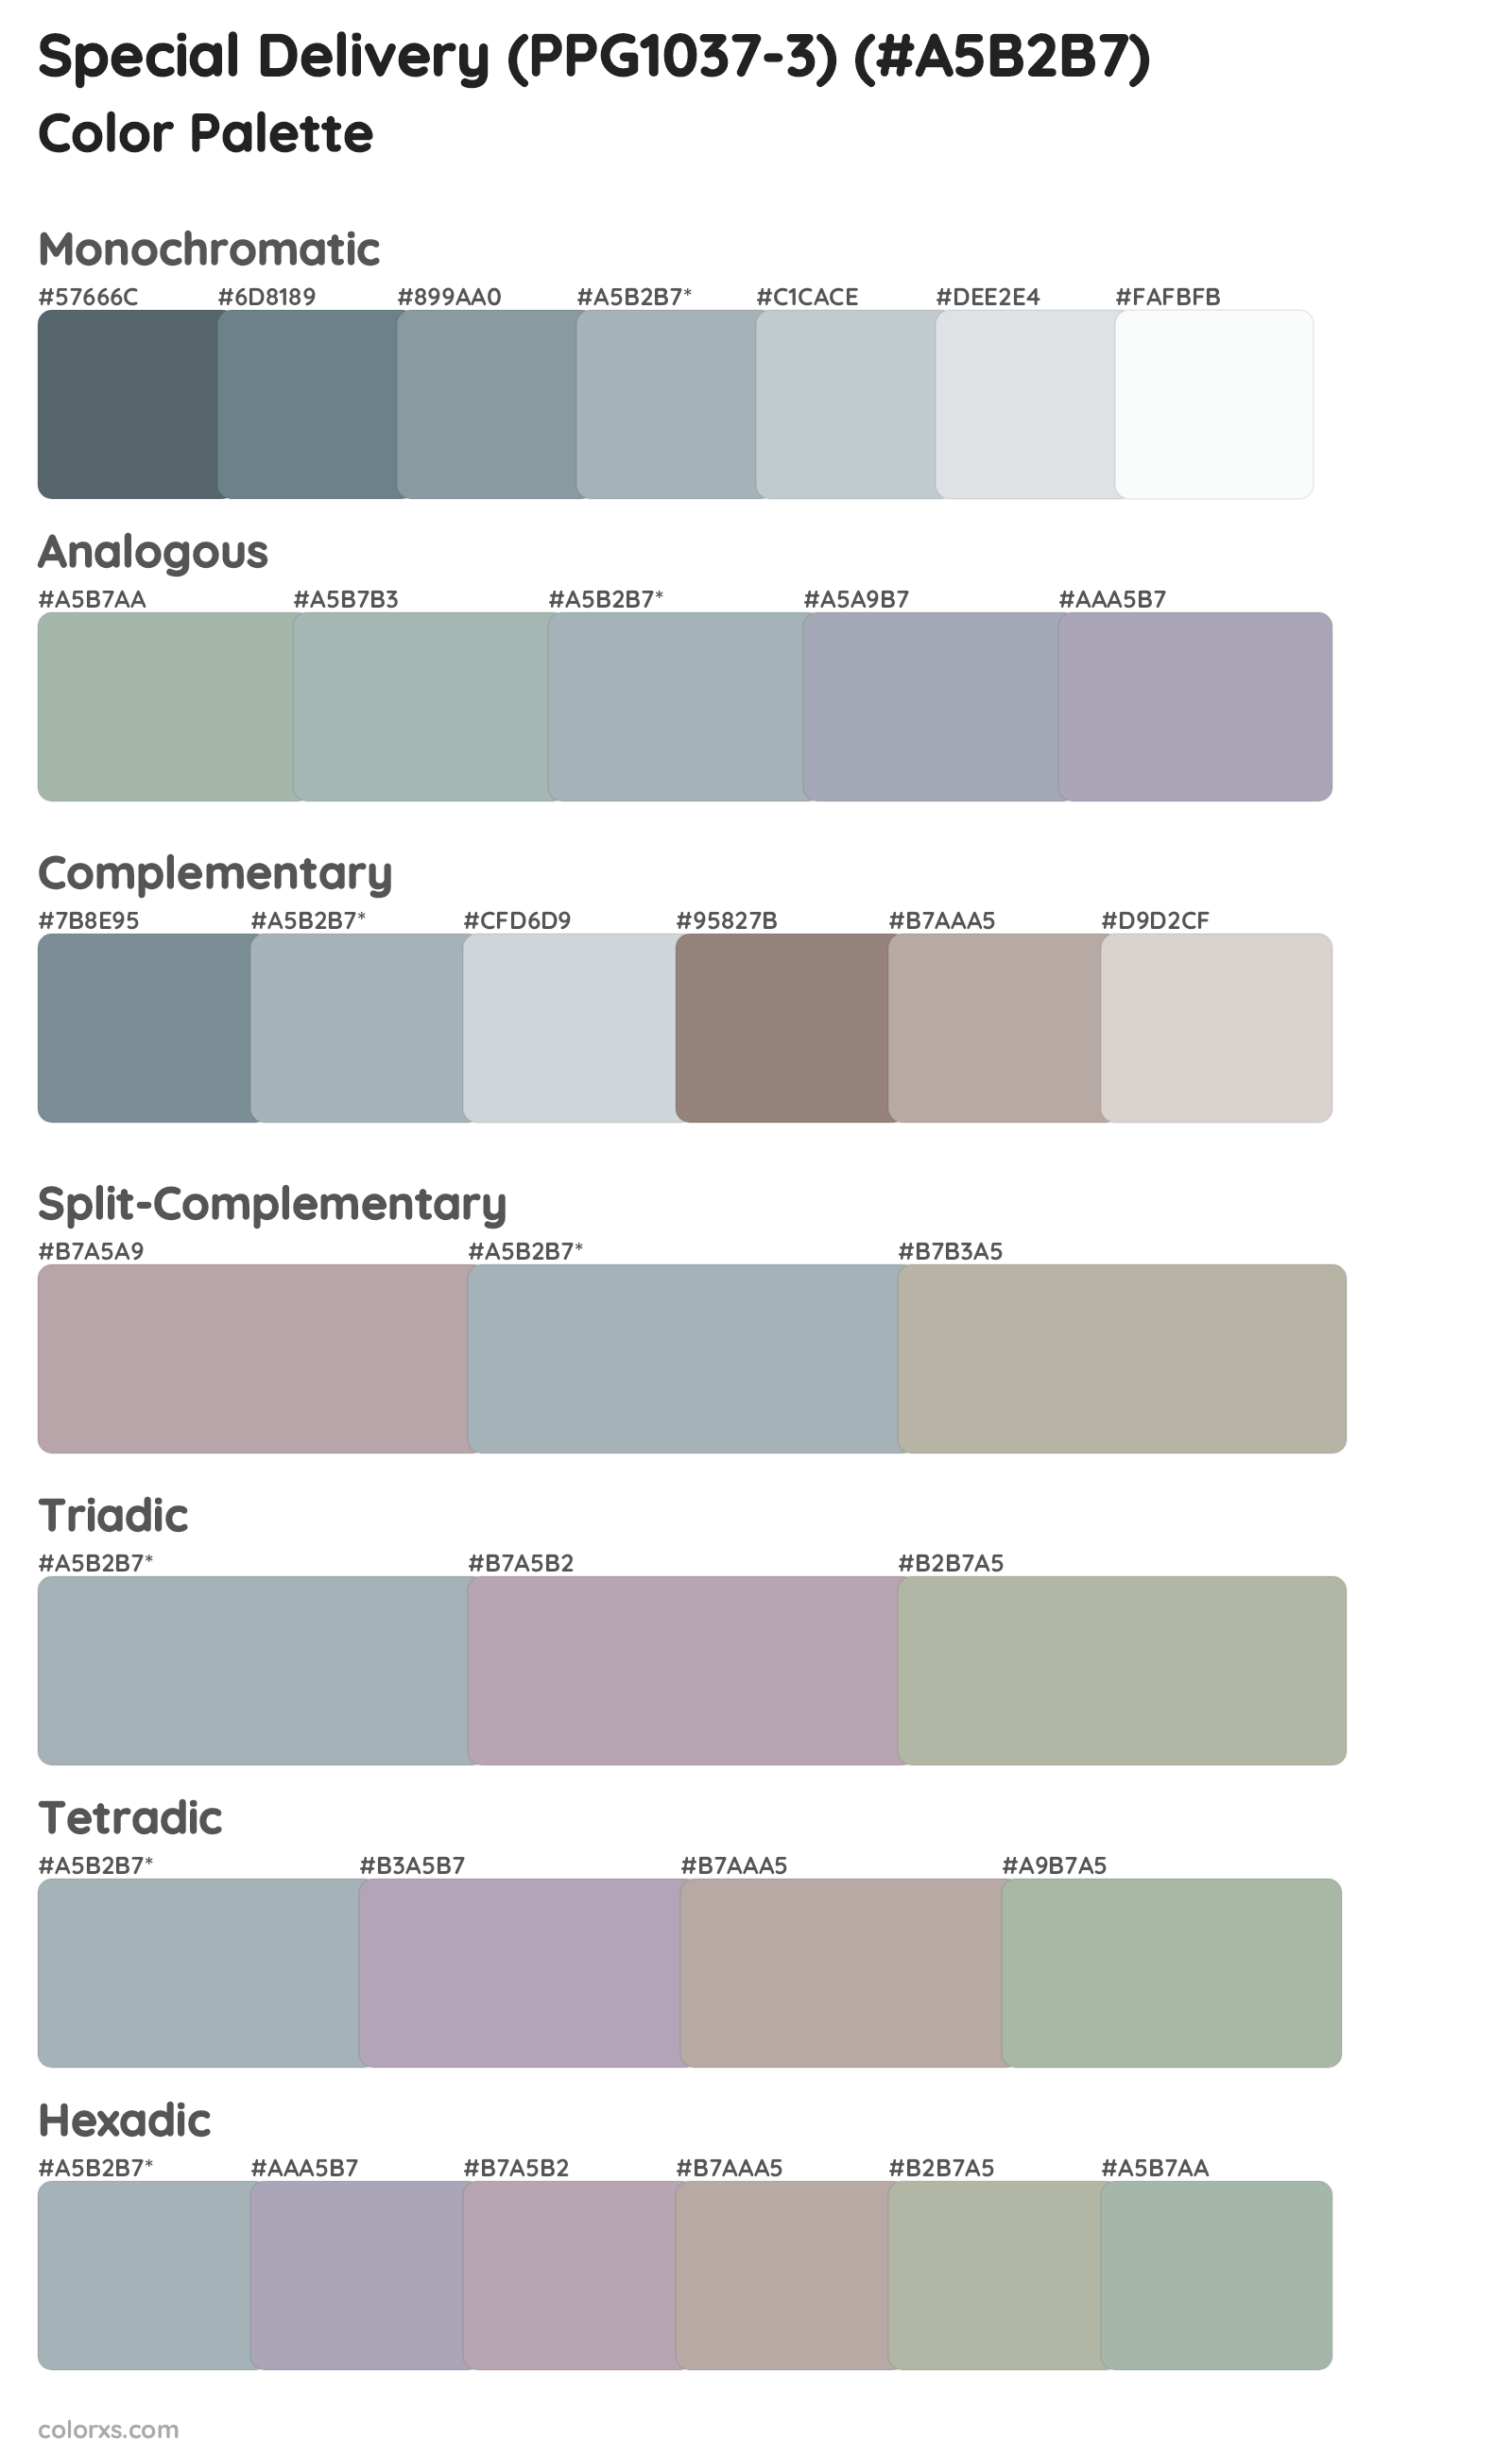 Special Delivery (PPG1037-3) Color Scheme Palettes